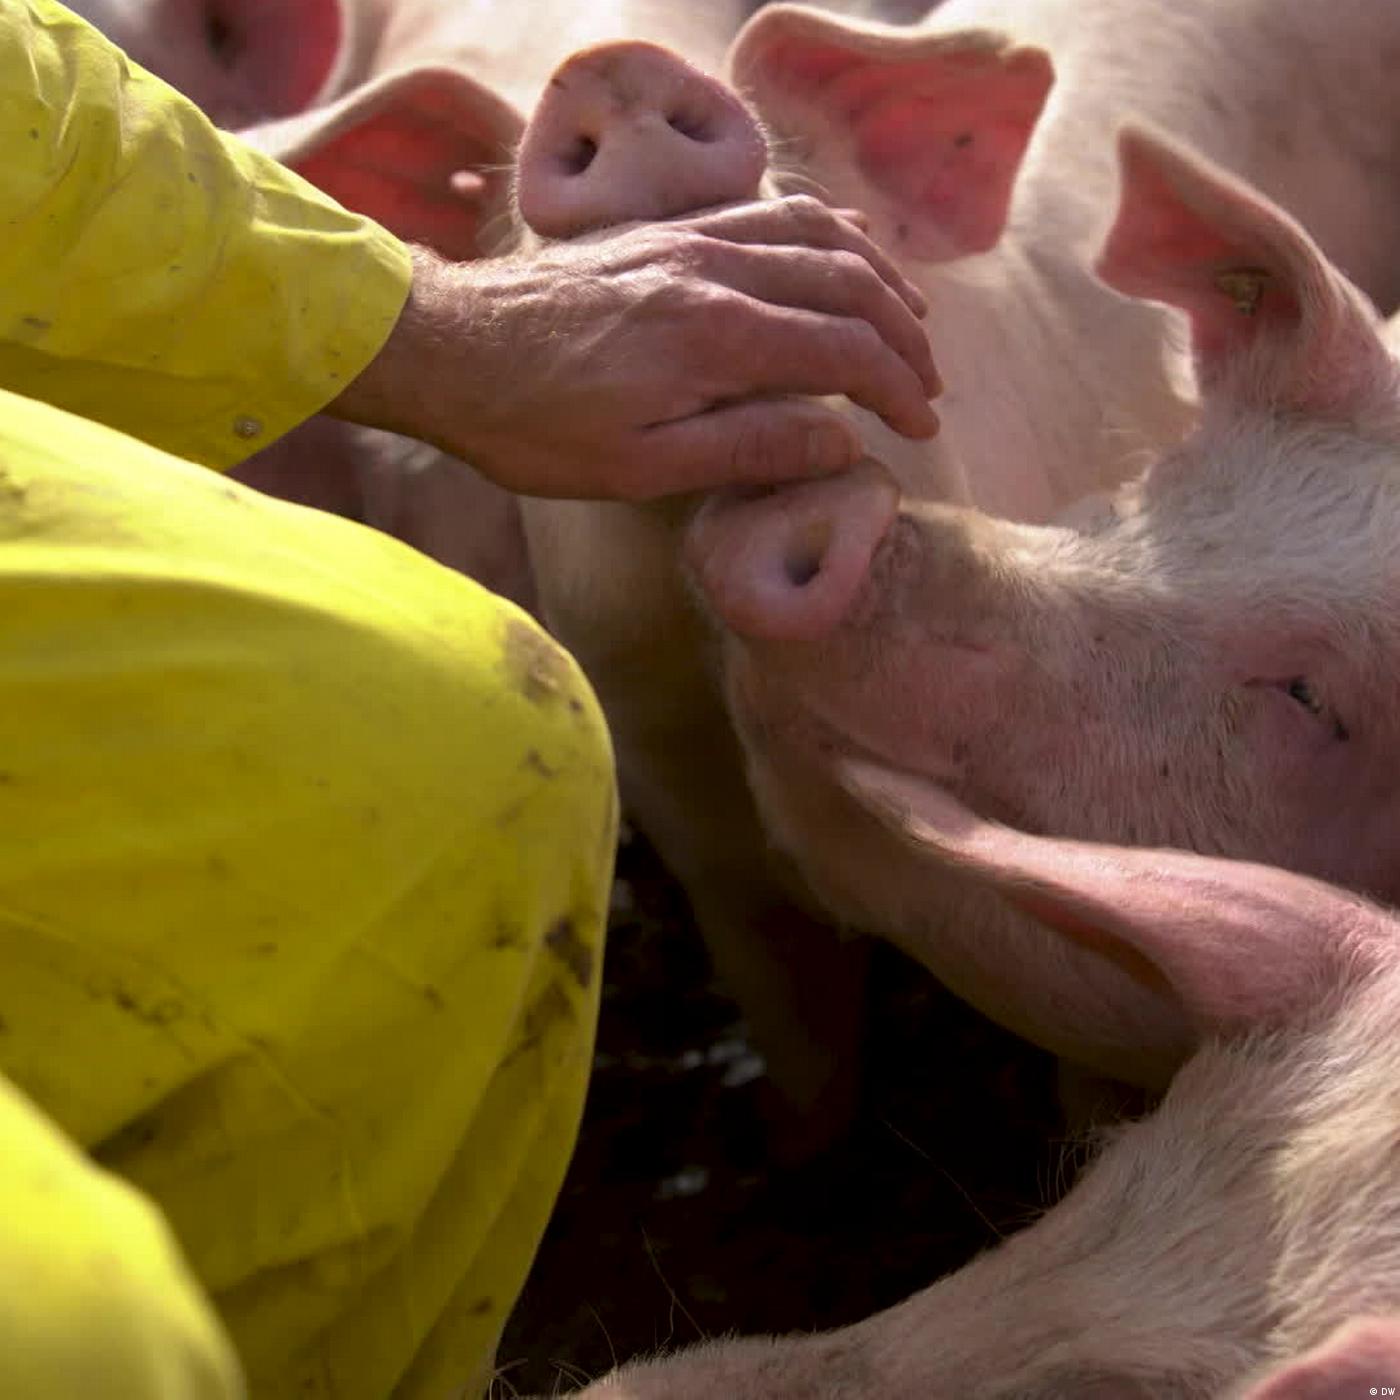 Dutch farmer saves Germany’s last socialist pigs